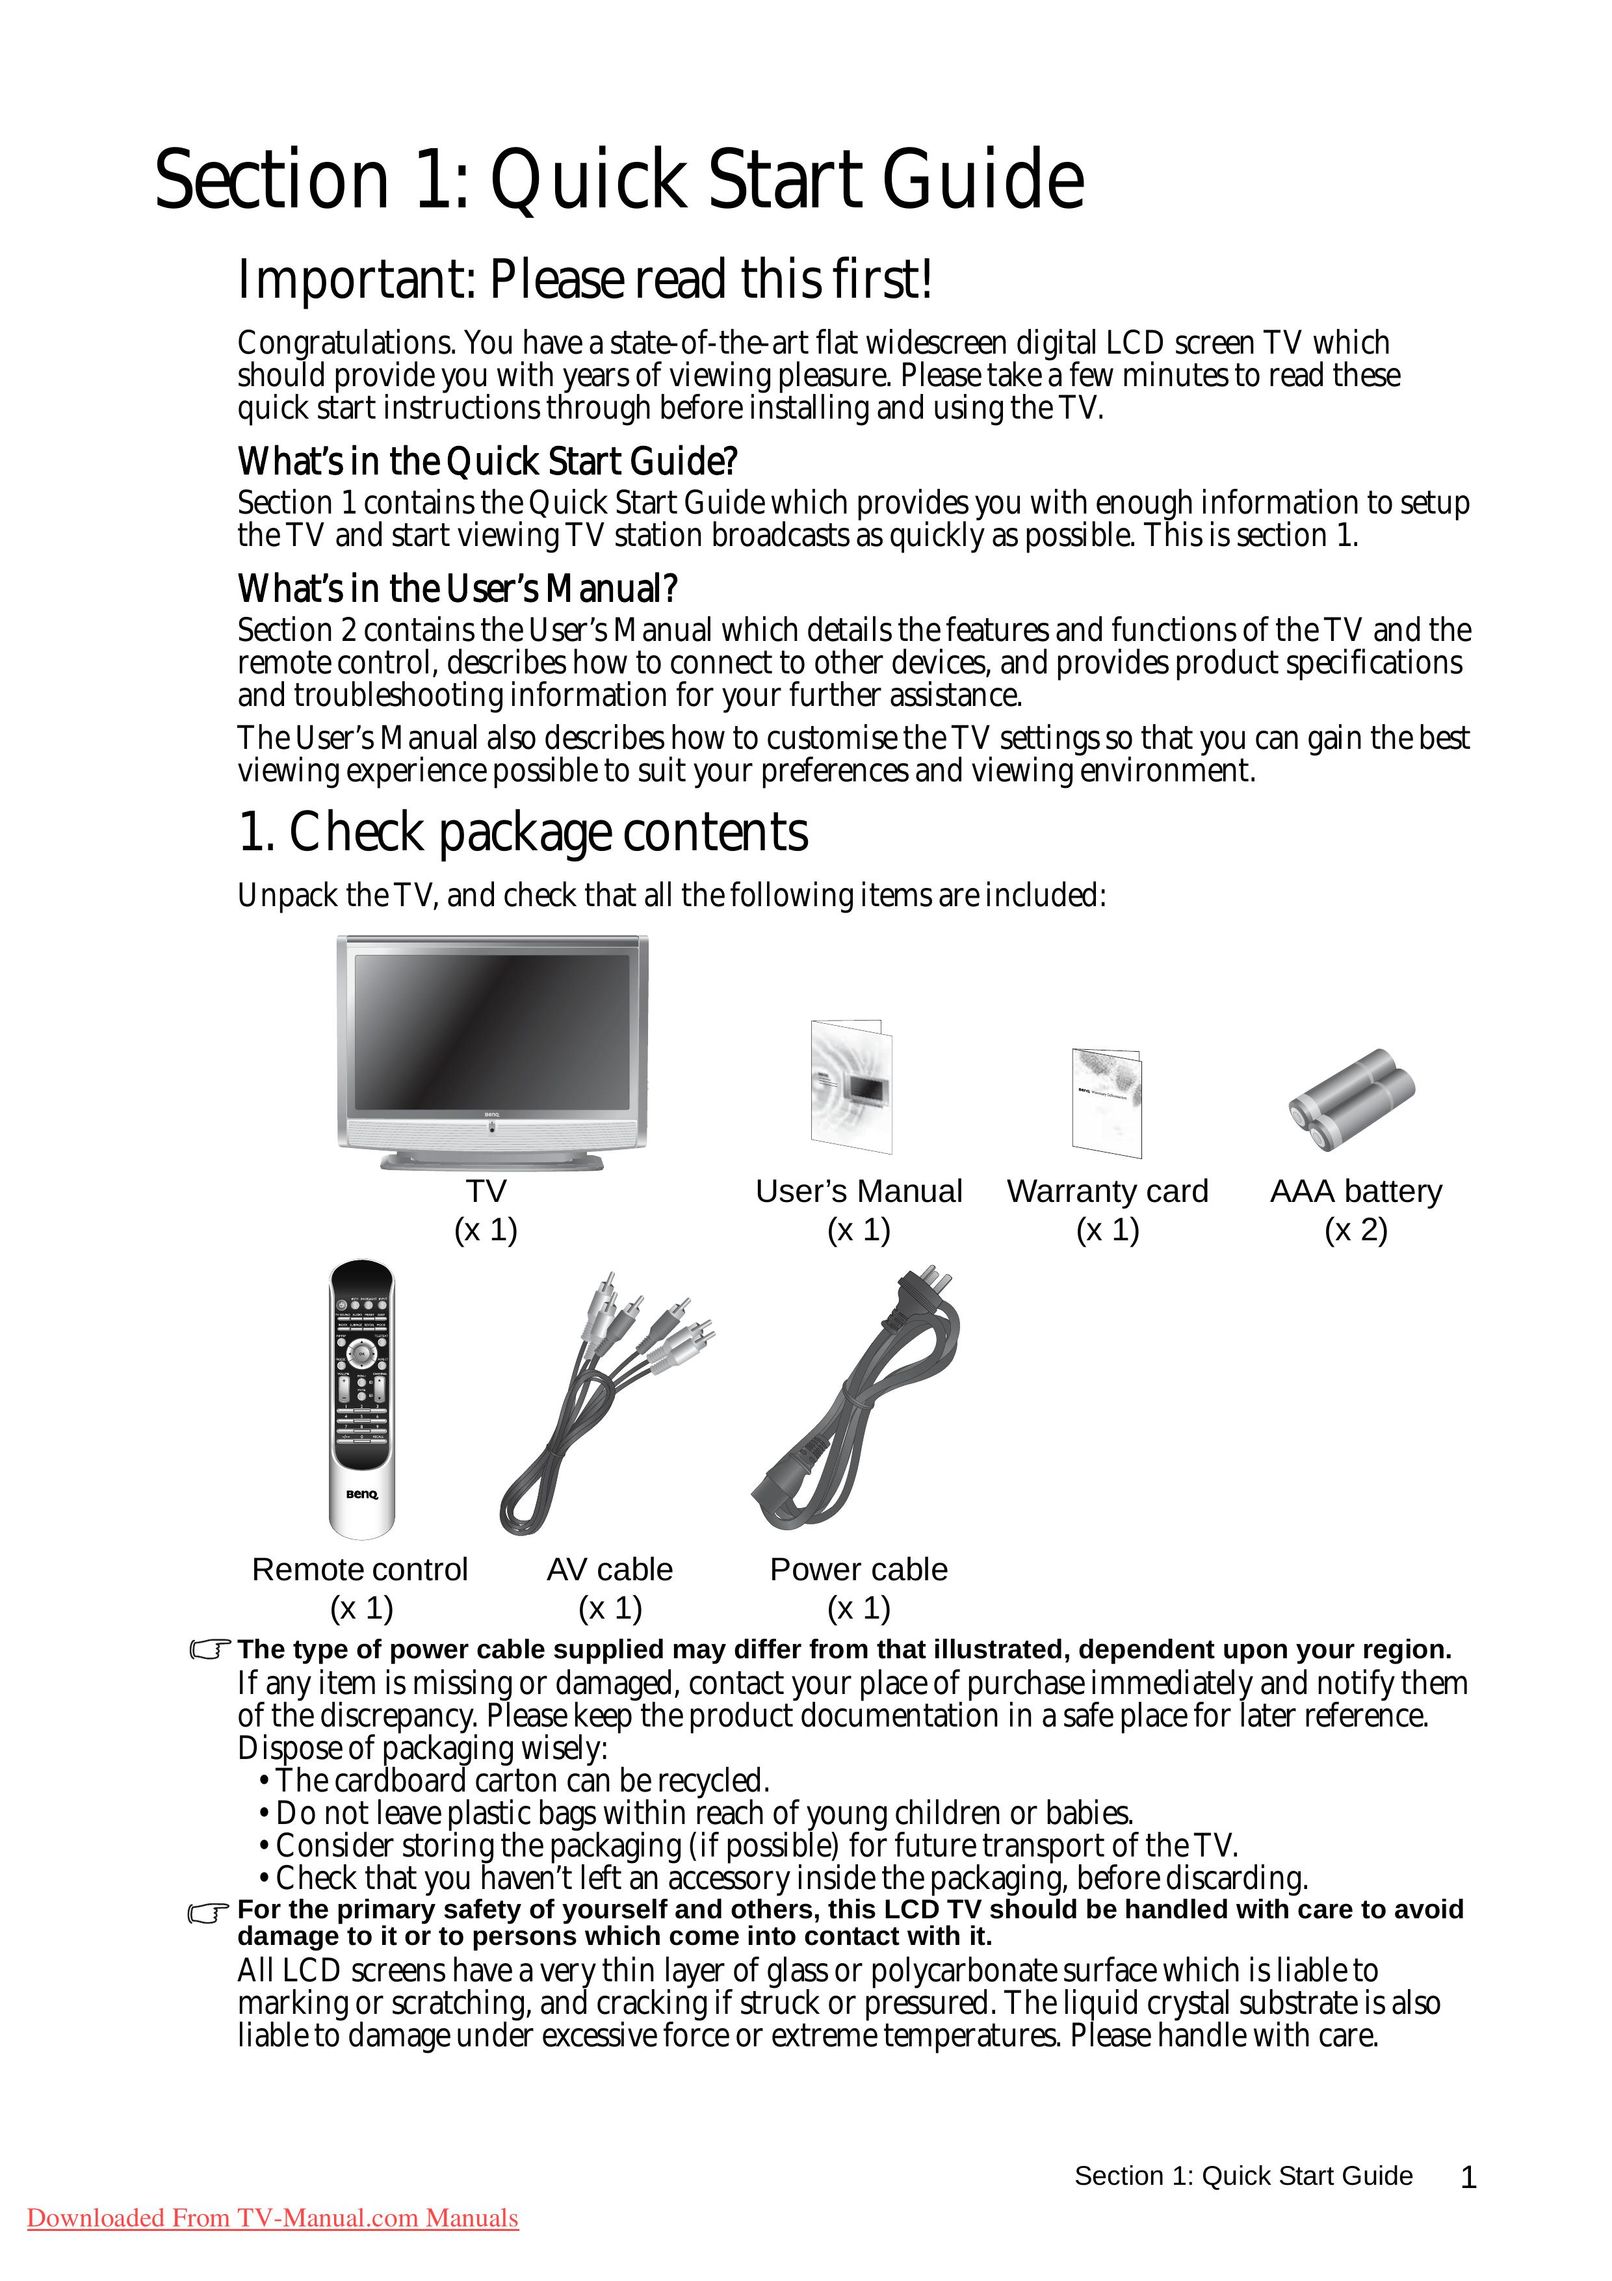 BenQ VA261 Flat Panel Television User Manual